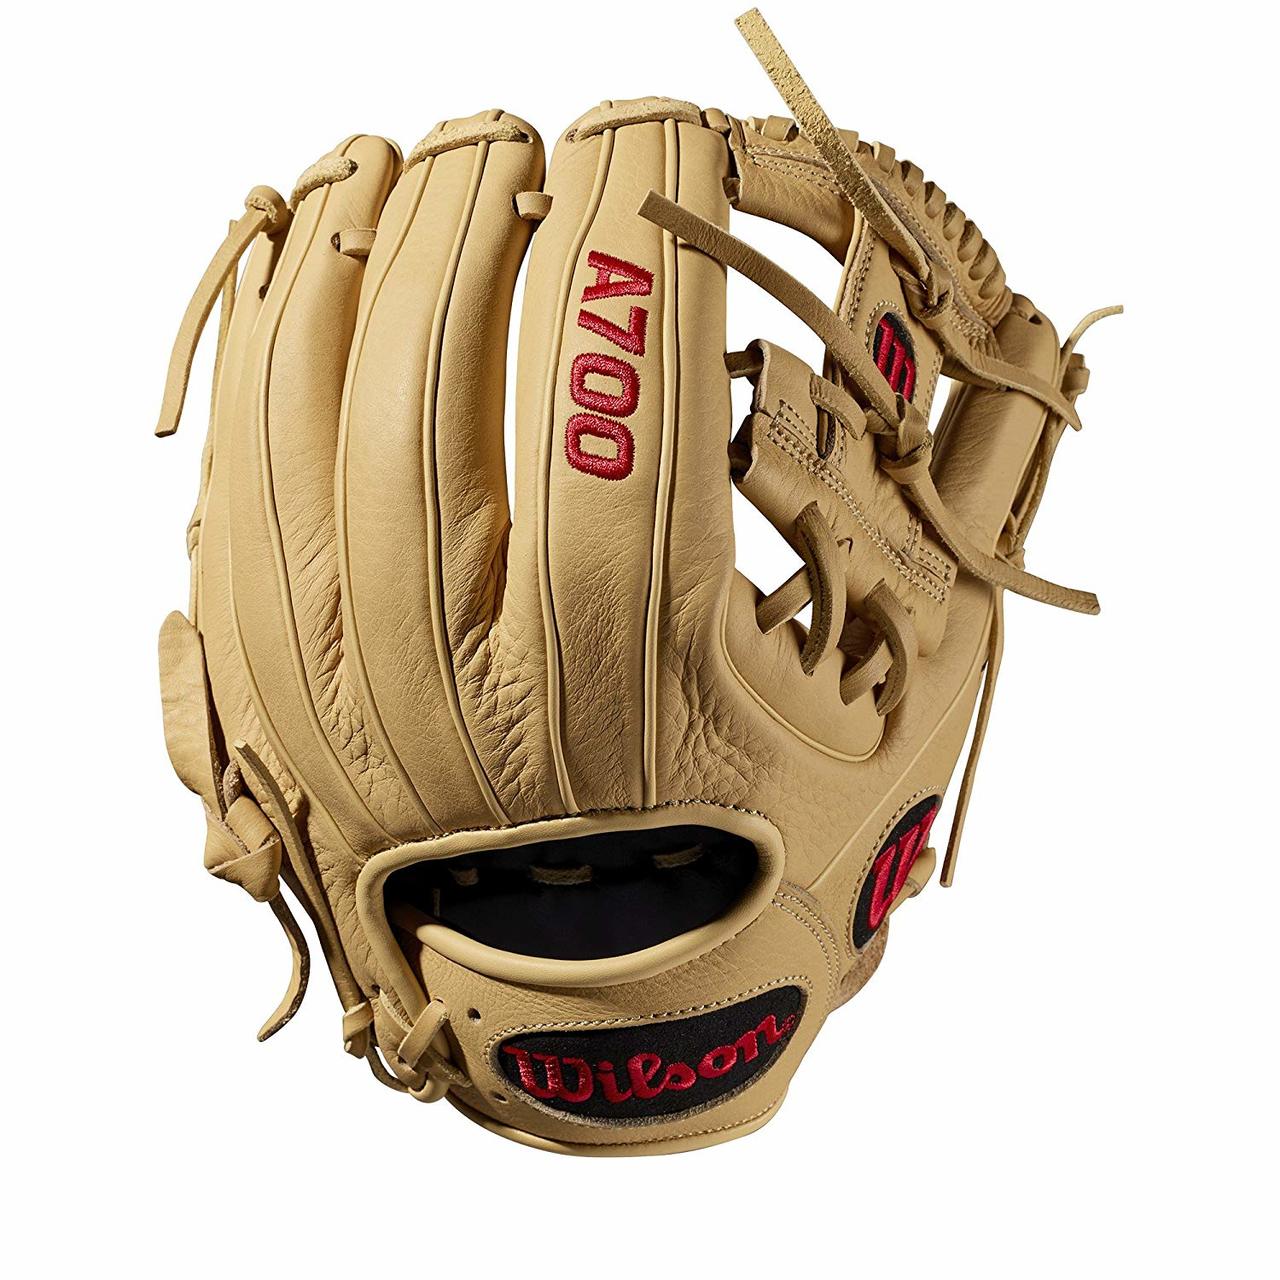 wilson-a700-baseball-glove-11-5-right-hand-throw WTA07RB19115-RightHandThrow Wilson 887768710934 11.5 inch Baseball glove H-Web design Blonde Full-Grain leather. The all-new